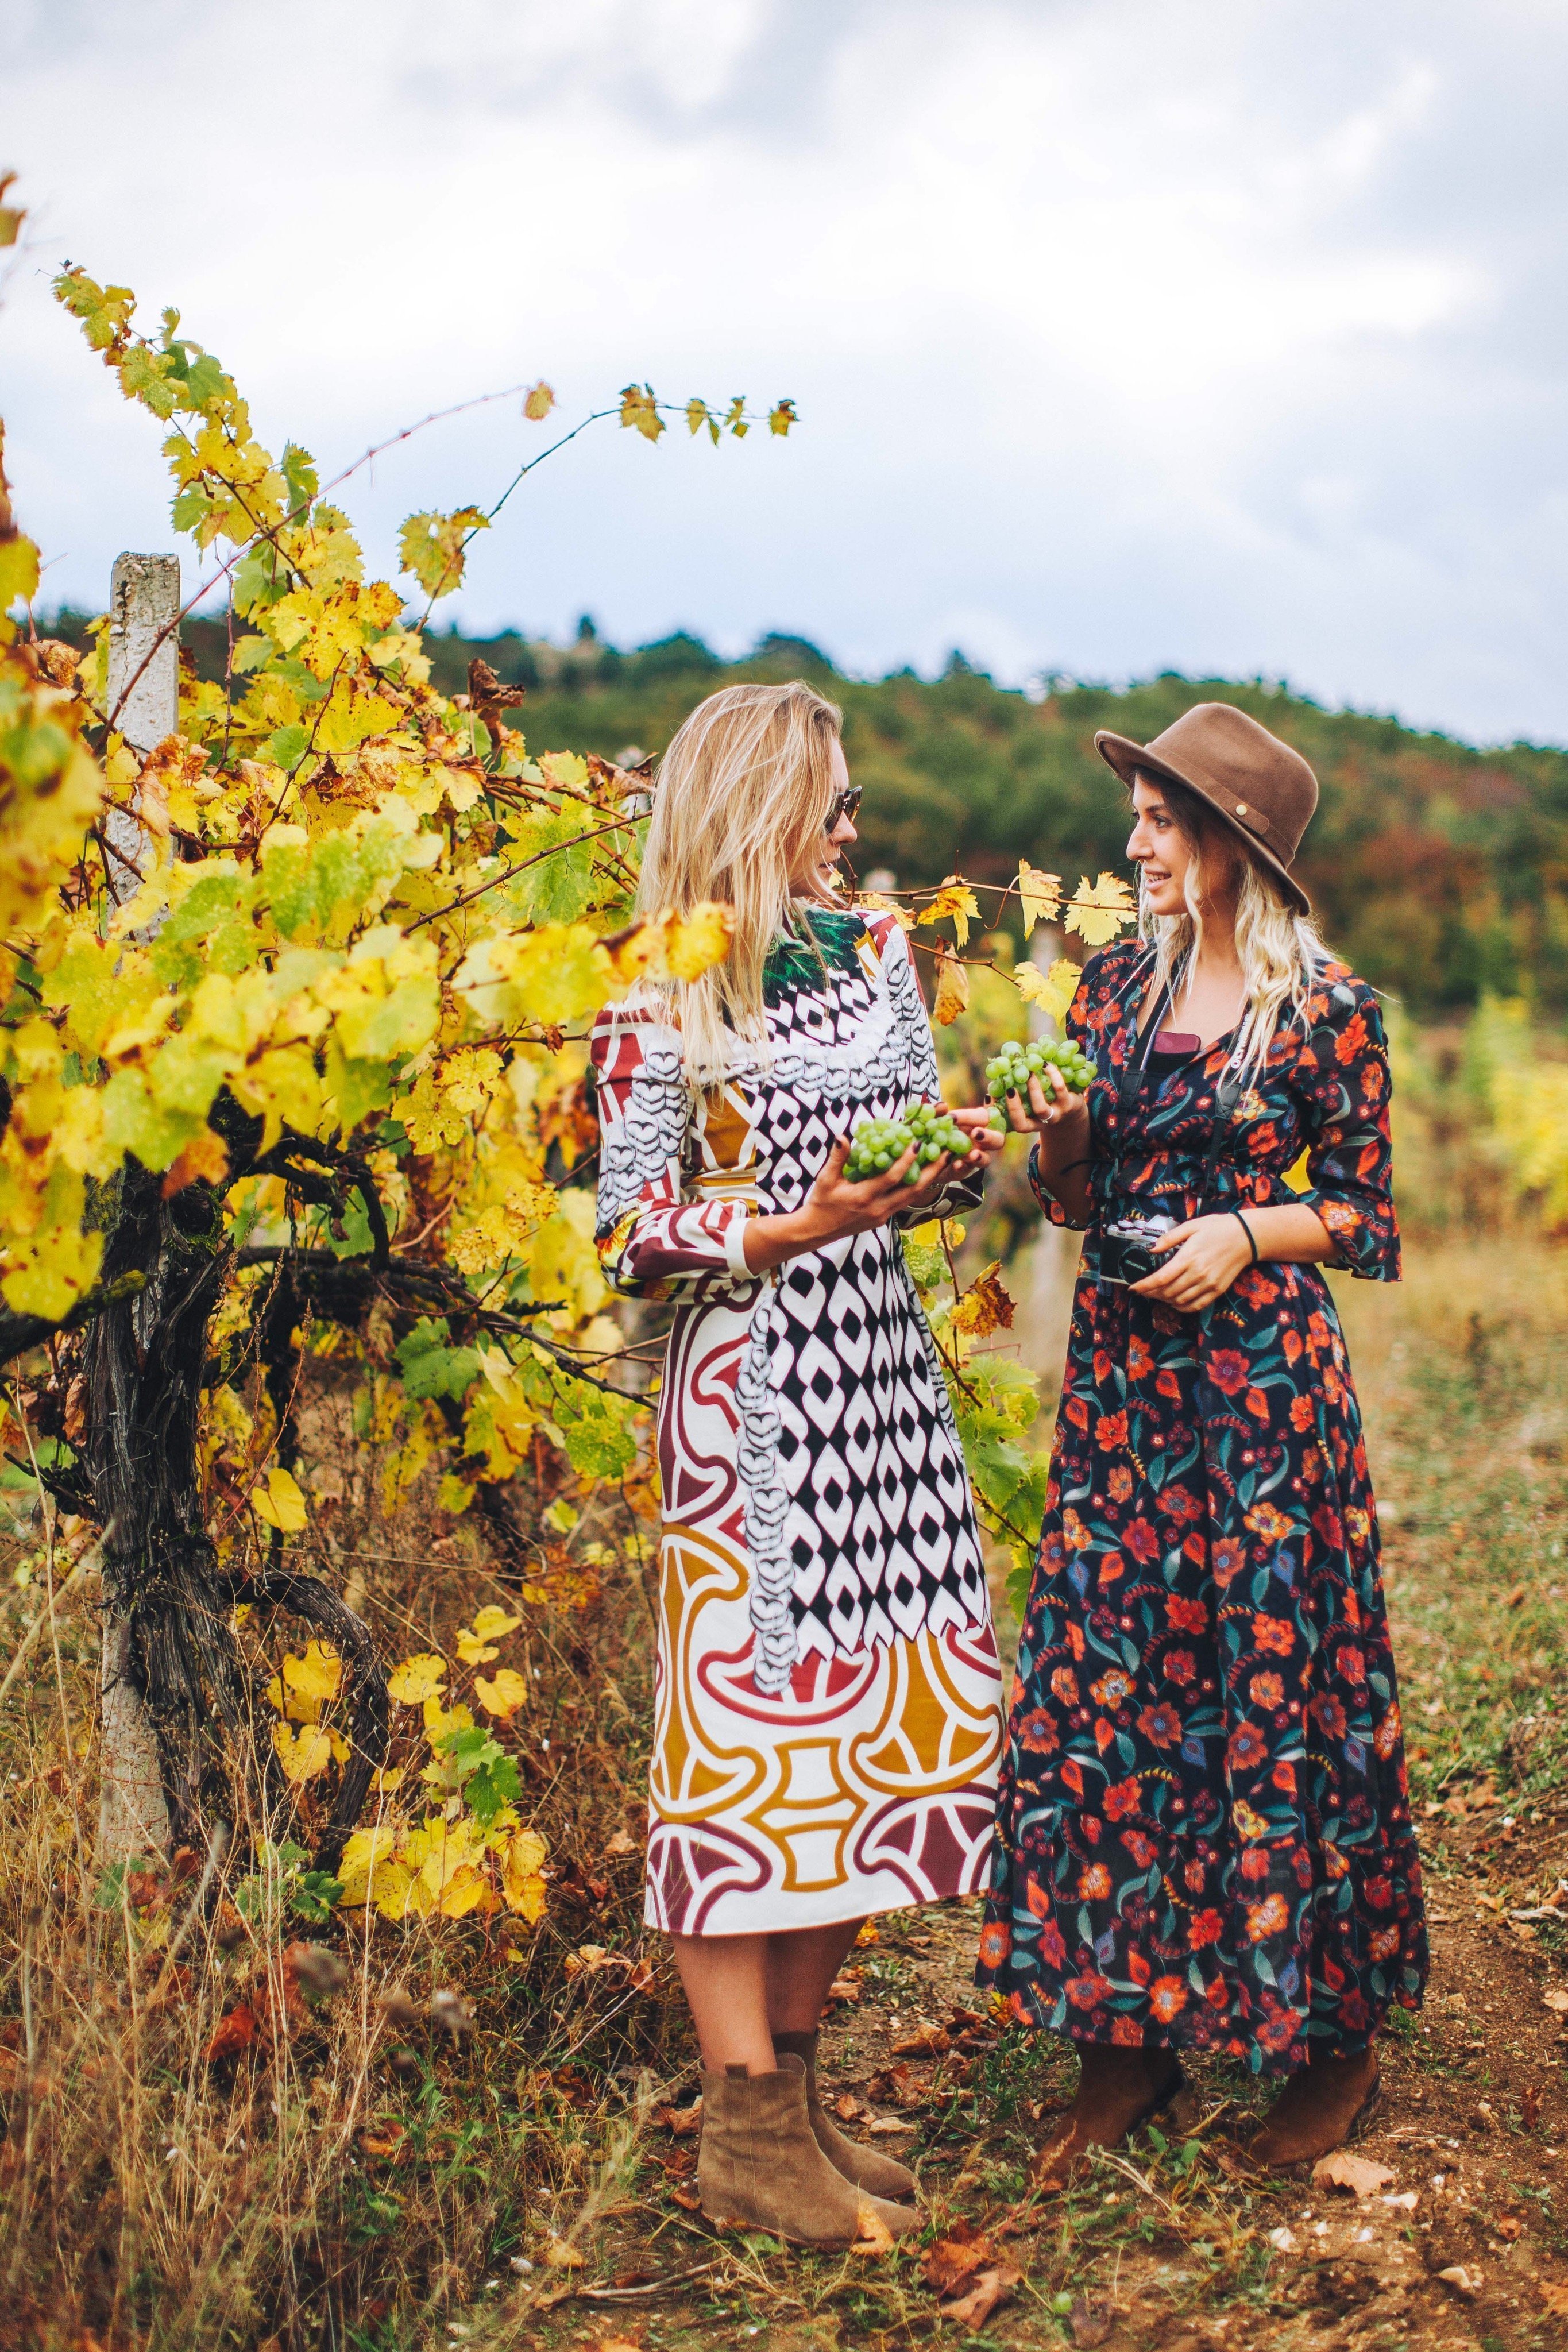 Girls in the vineyards